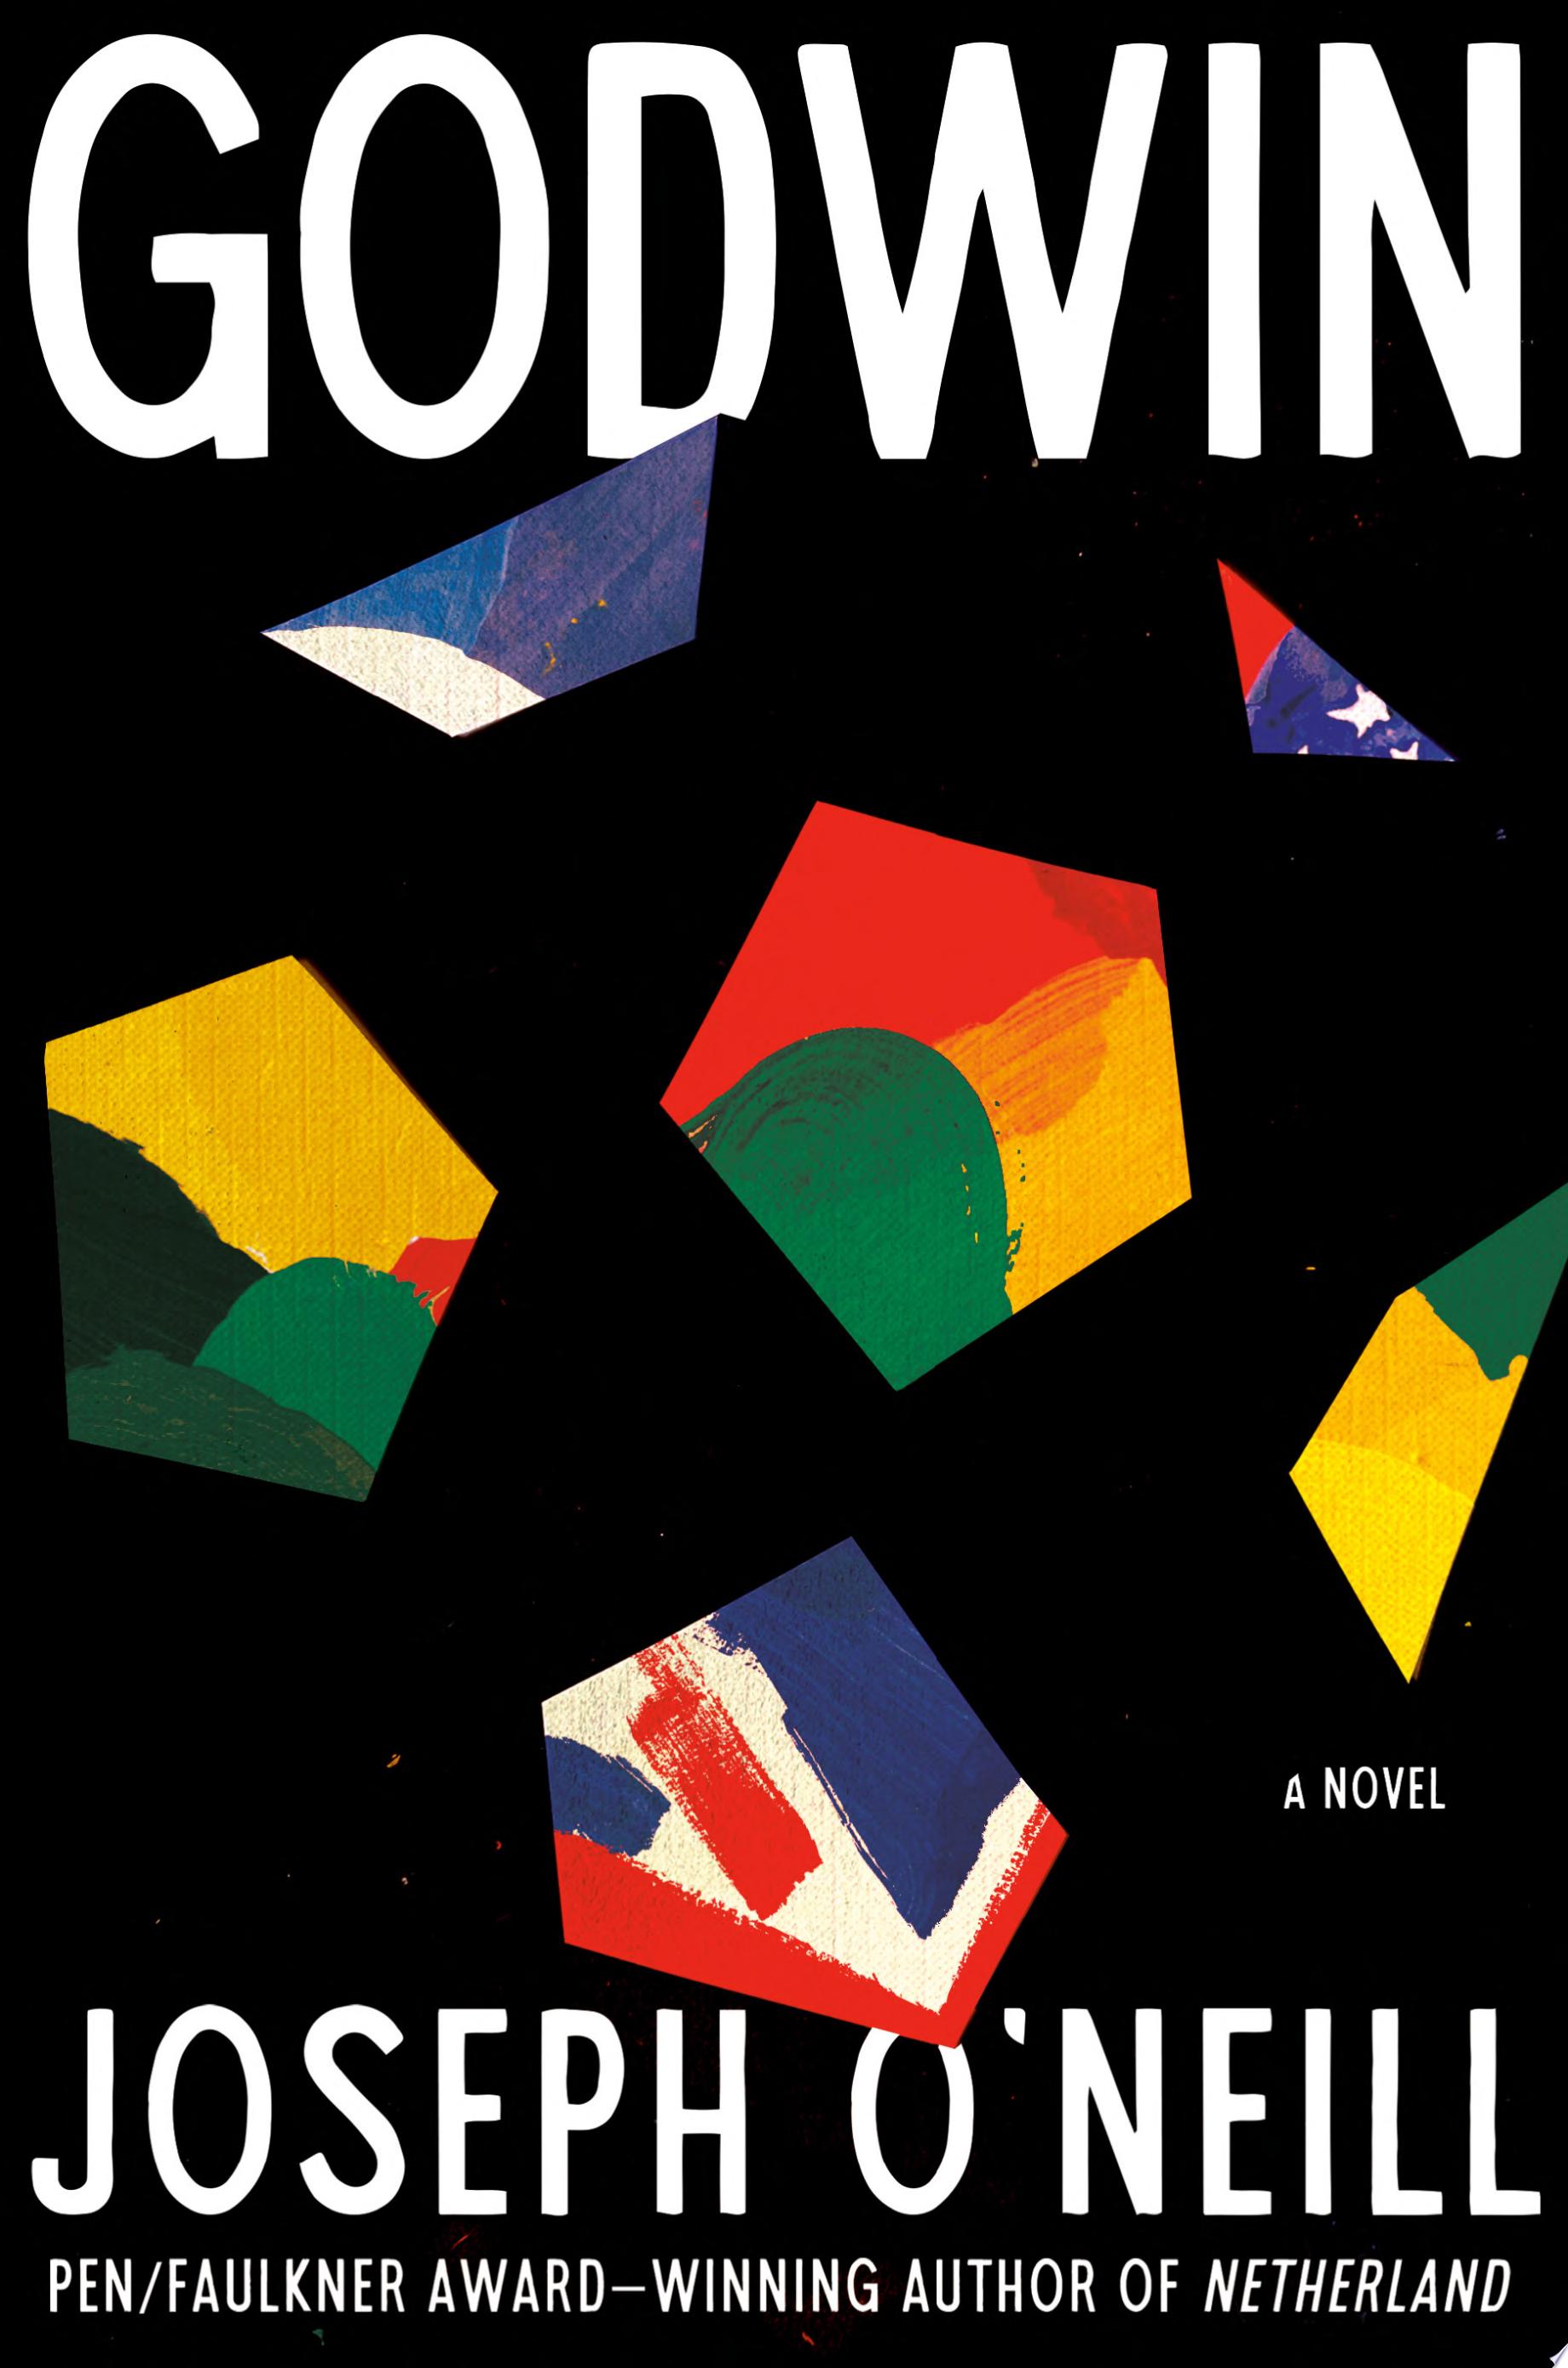 Image for "Godwin"